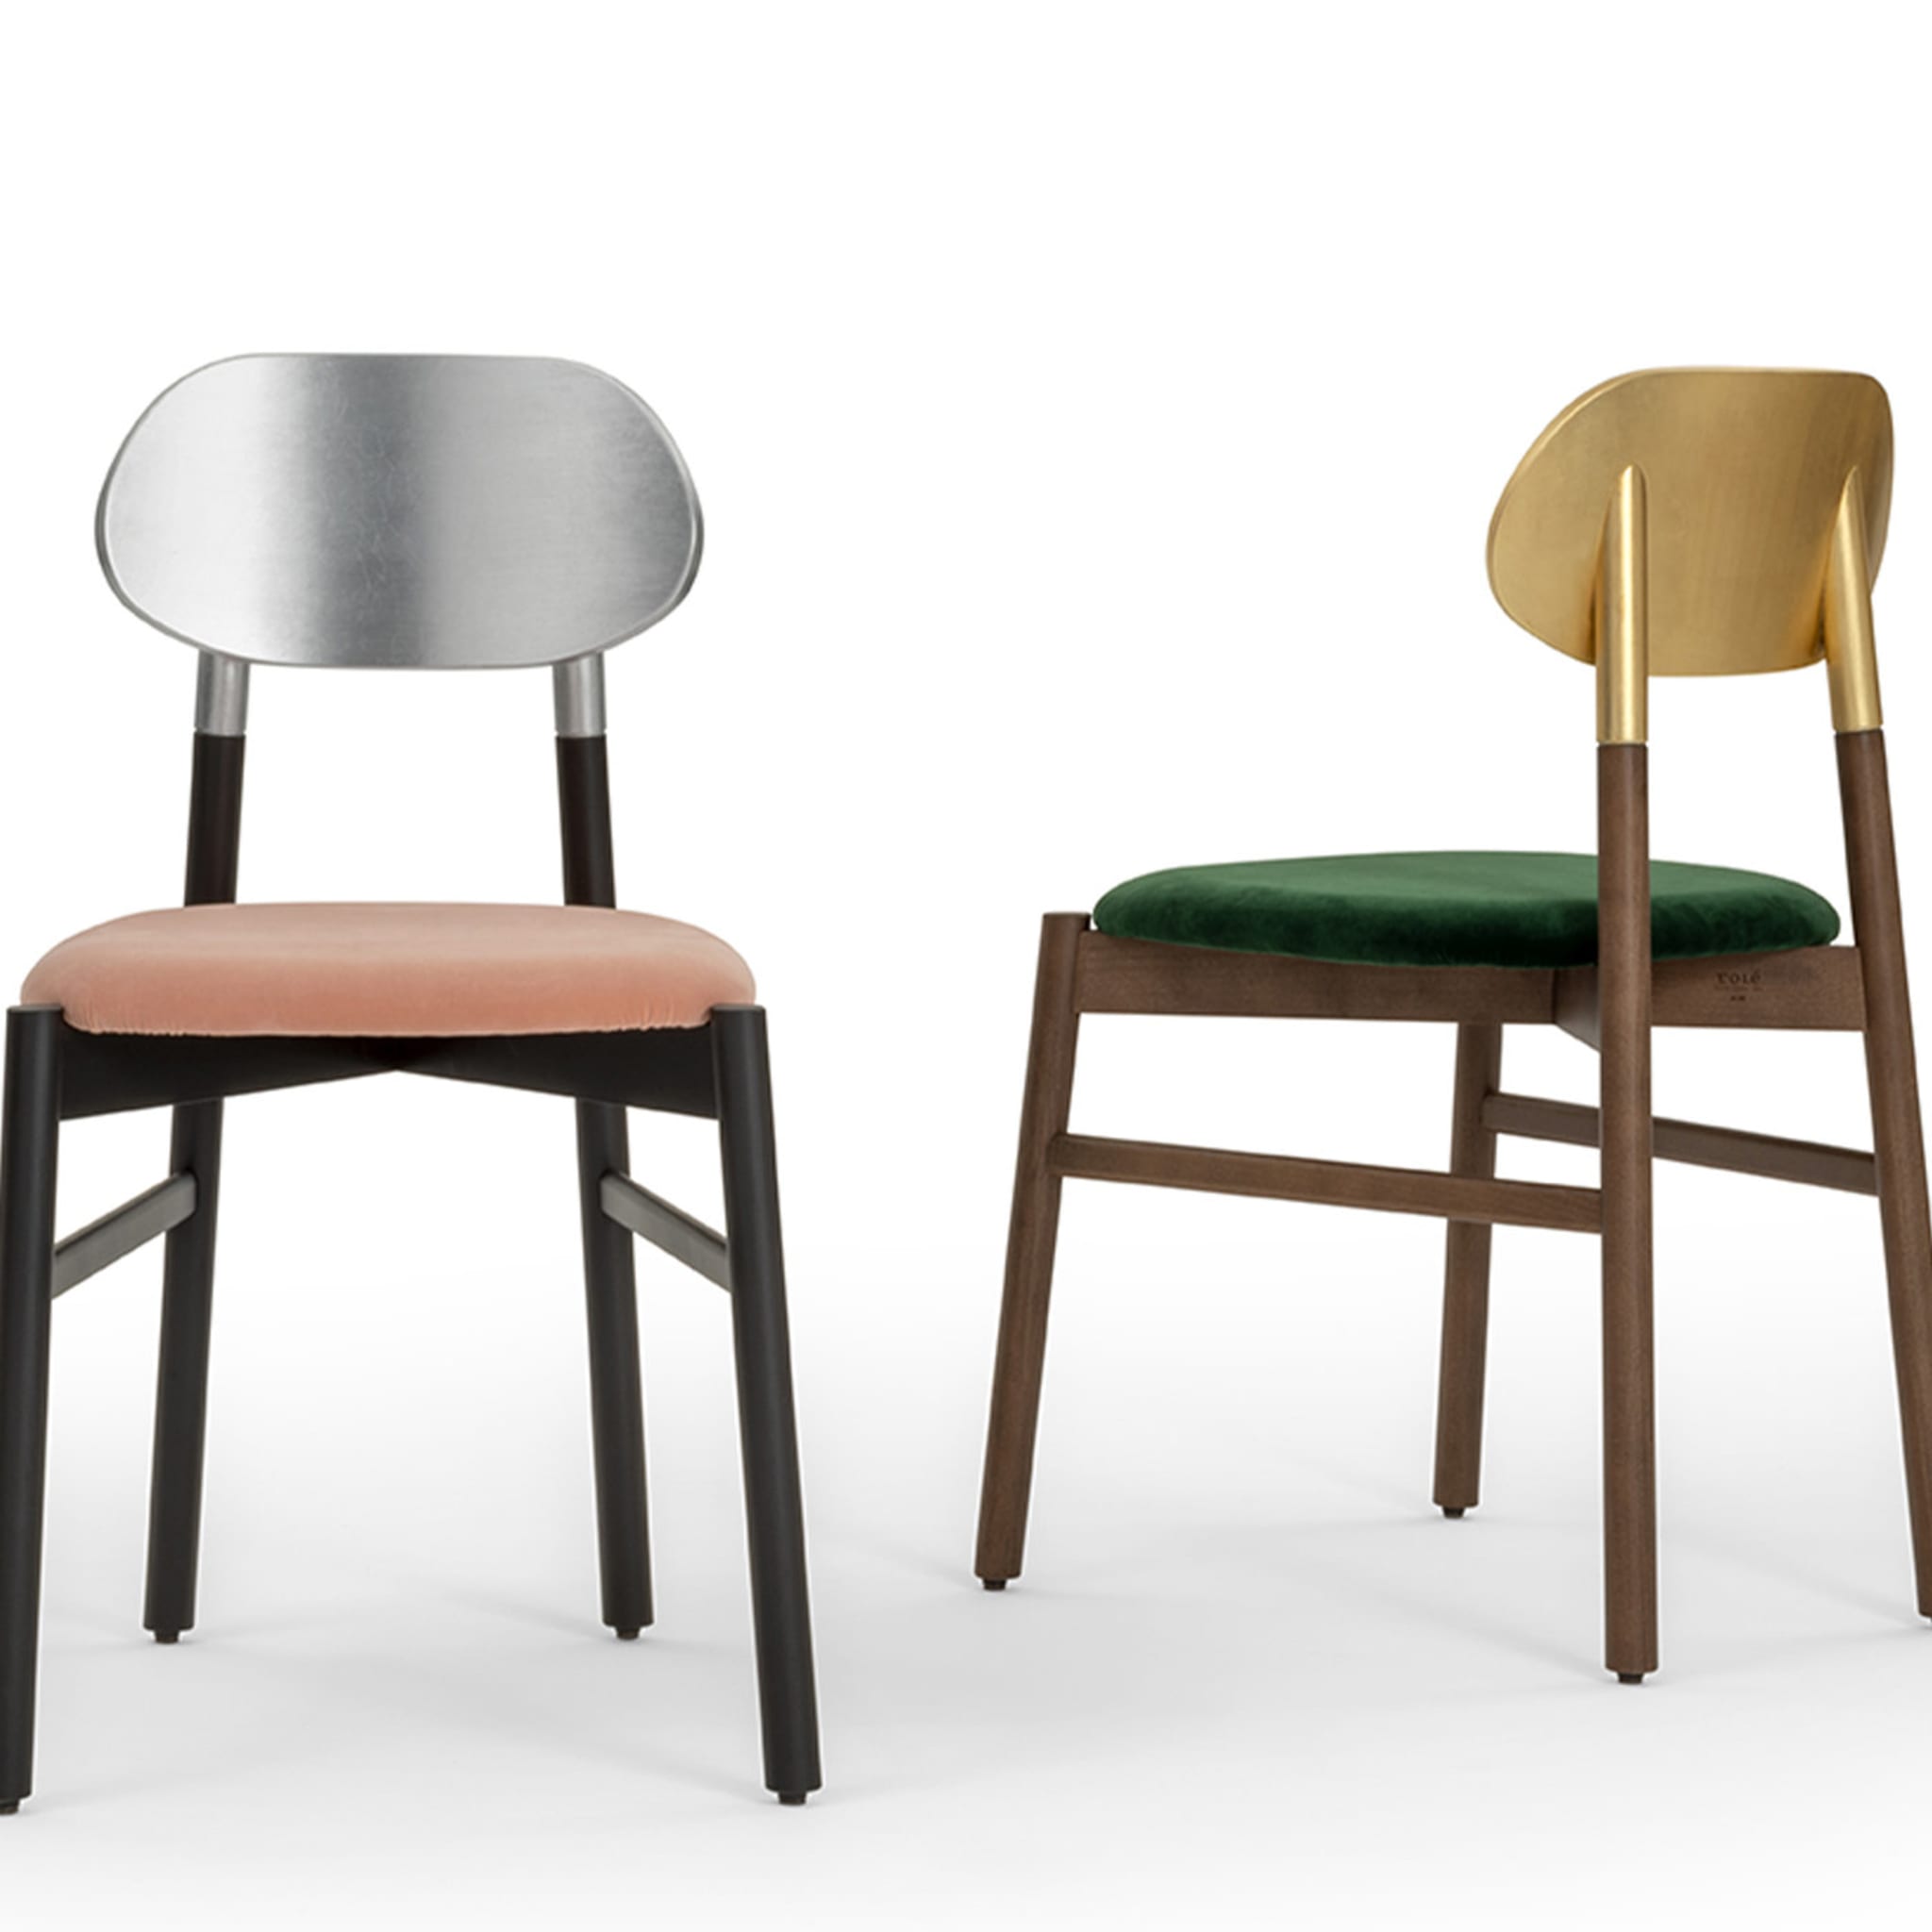 Bokken Gold and Emerald Chair by Bellavista & Piccini - Alternative view 1